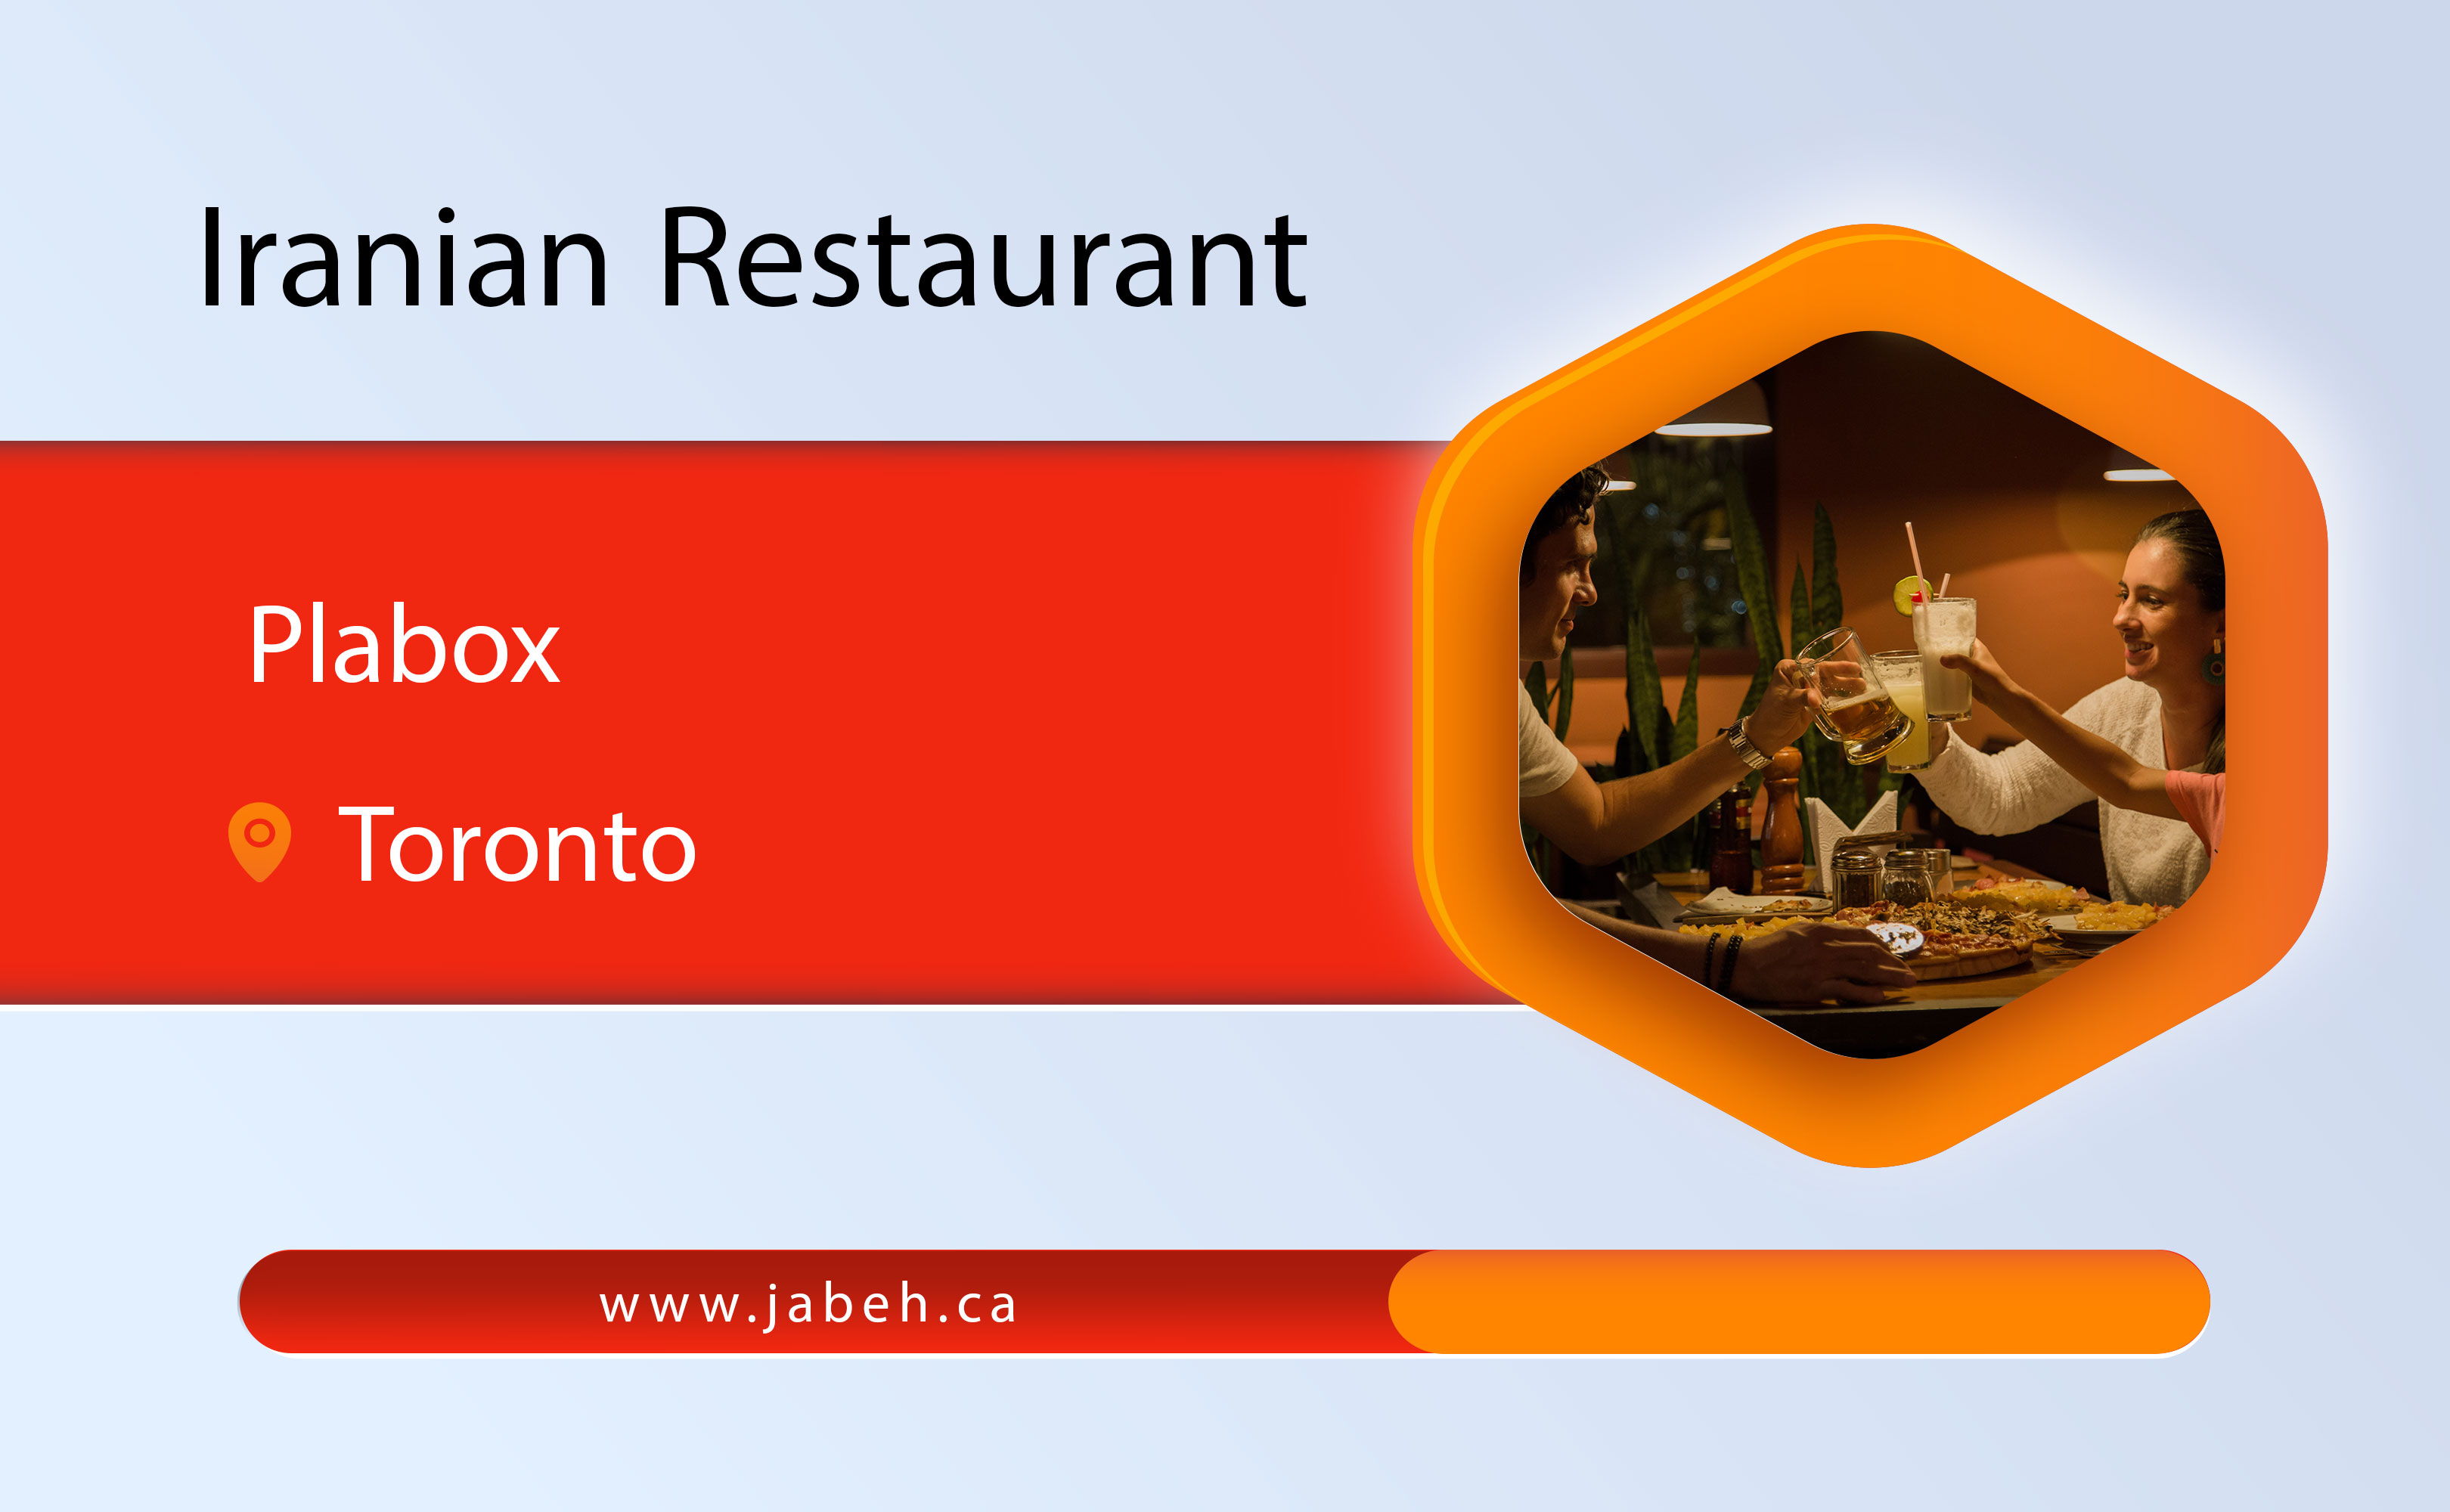 Plabox Iranian restaurant in Toronto